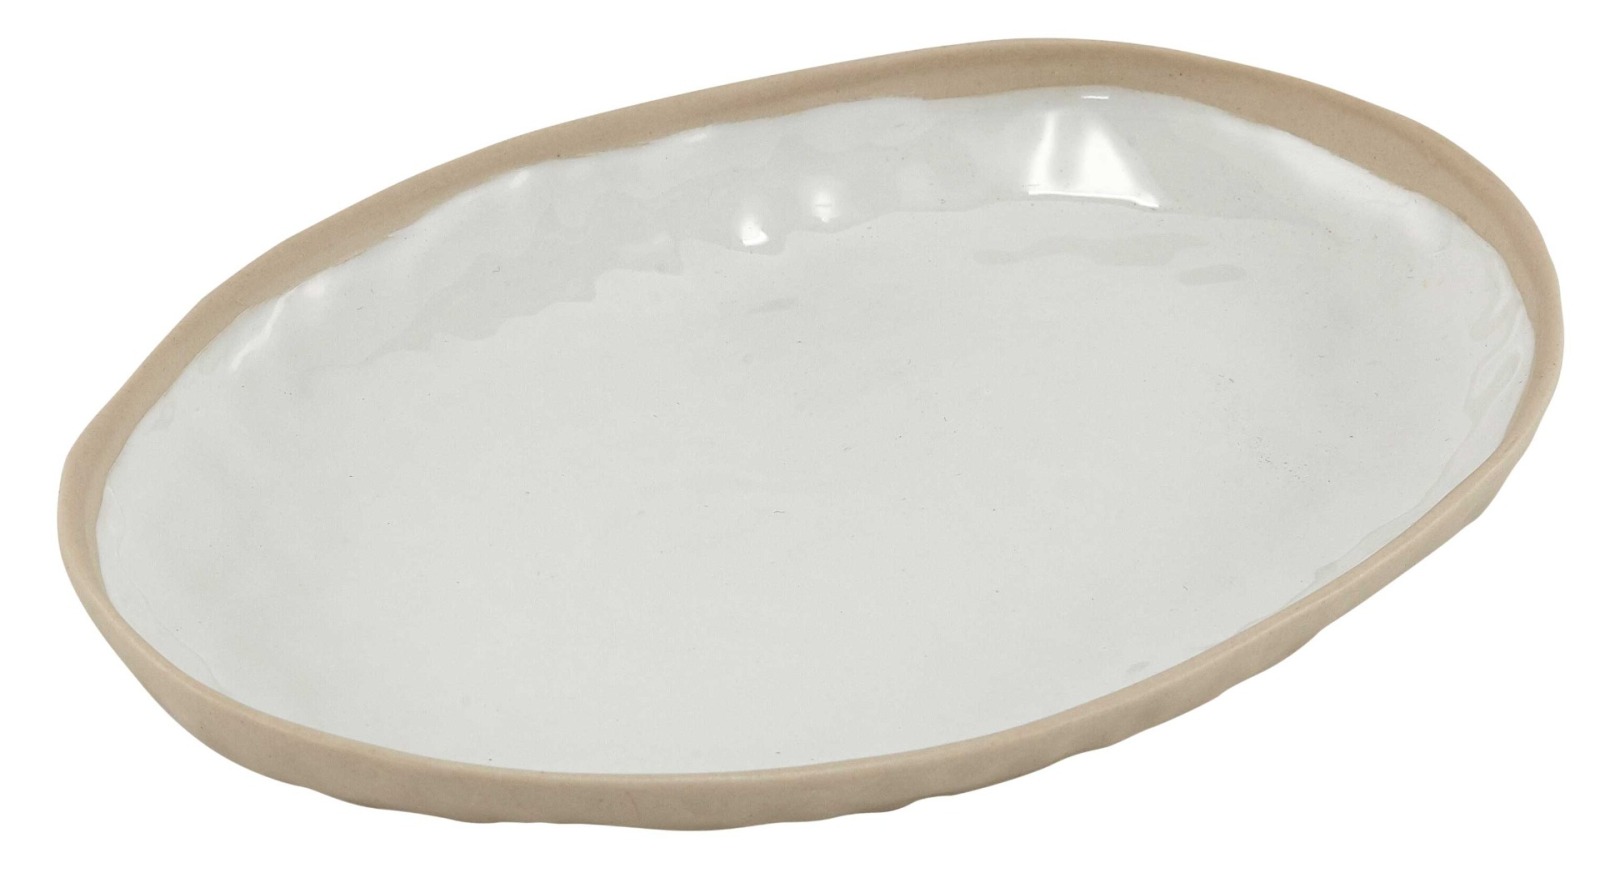 Liv interior - Teller blanc Keramik weiß 20x15cm